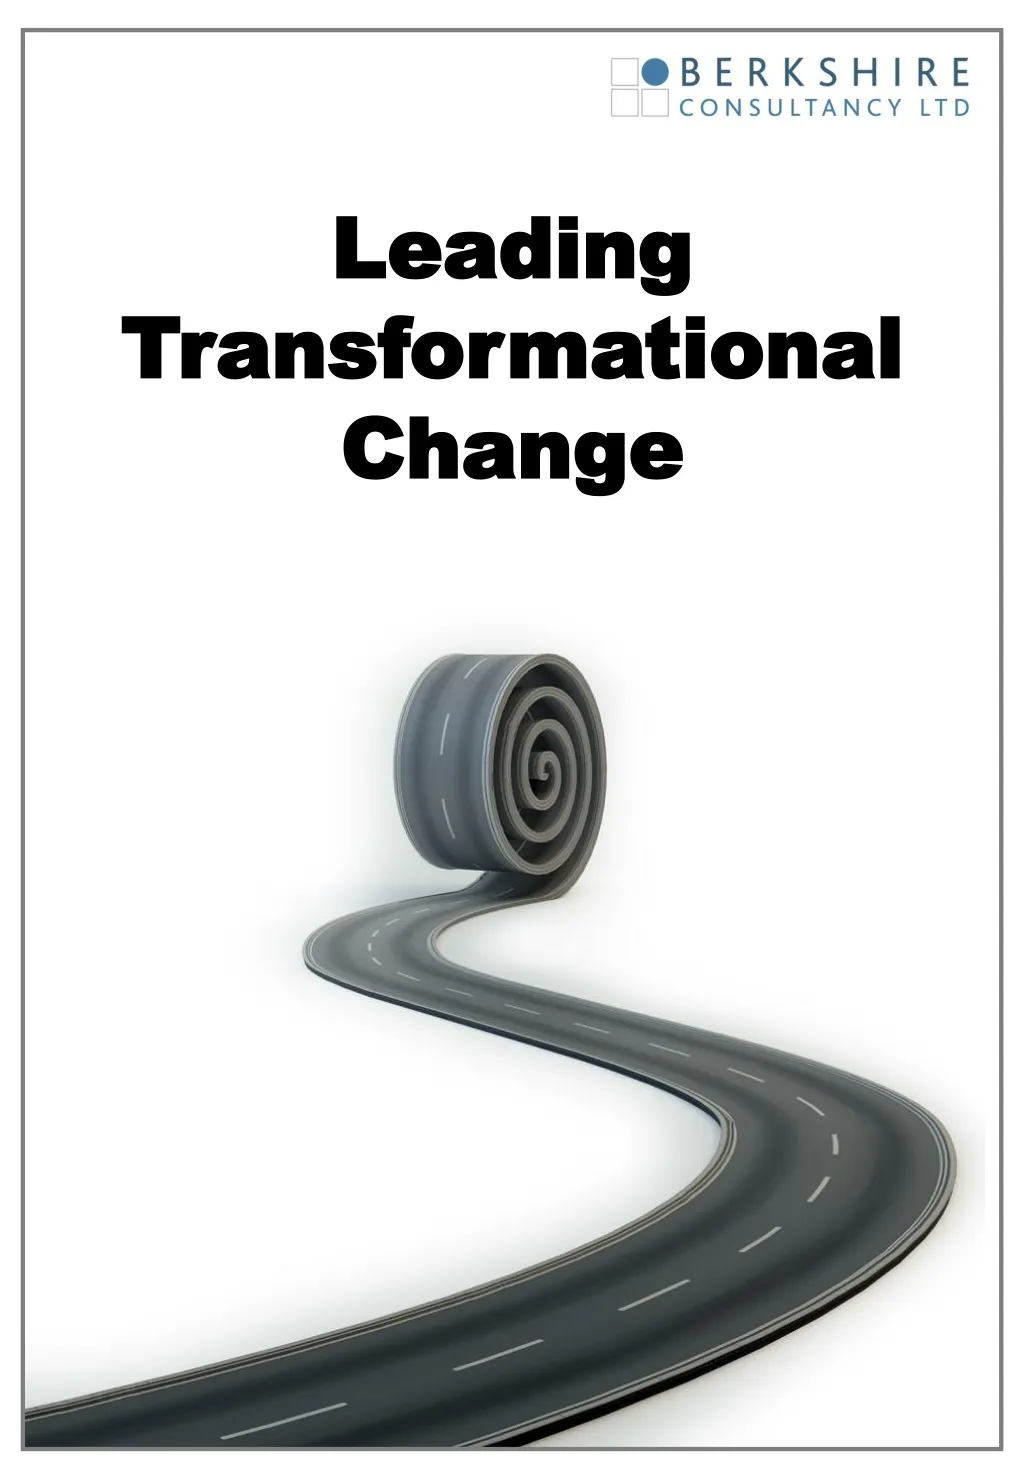 leading transformational change